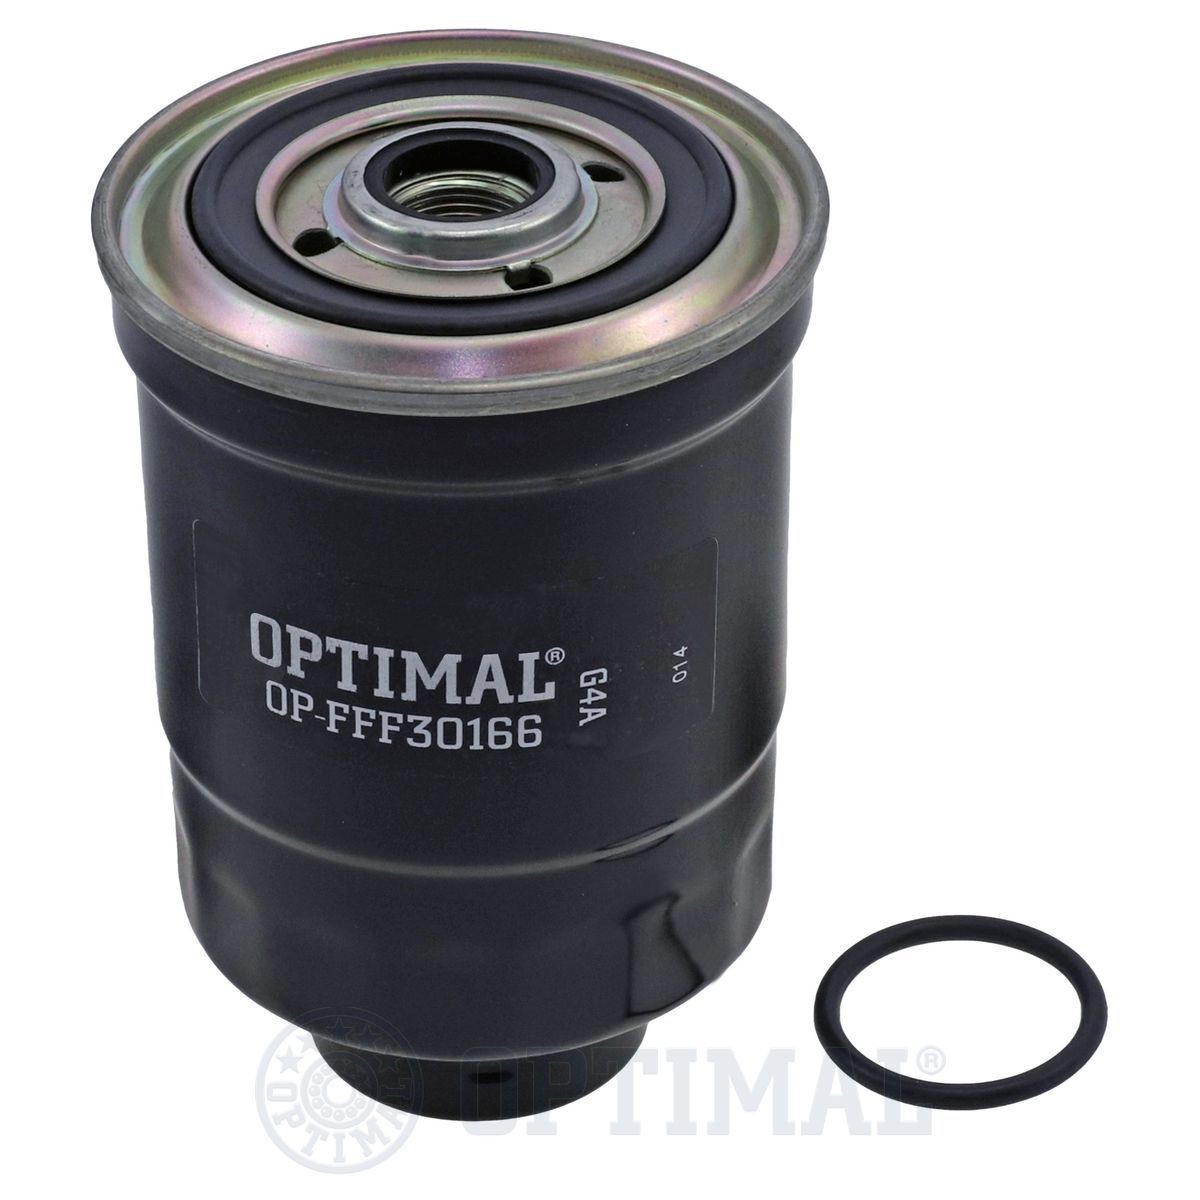 OPTIMAL OP-FFF30166 Fuel filter 31390H1000